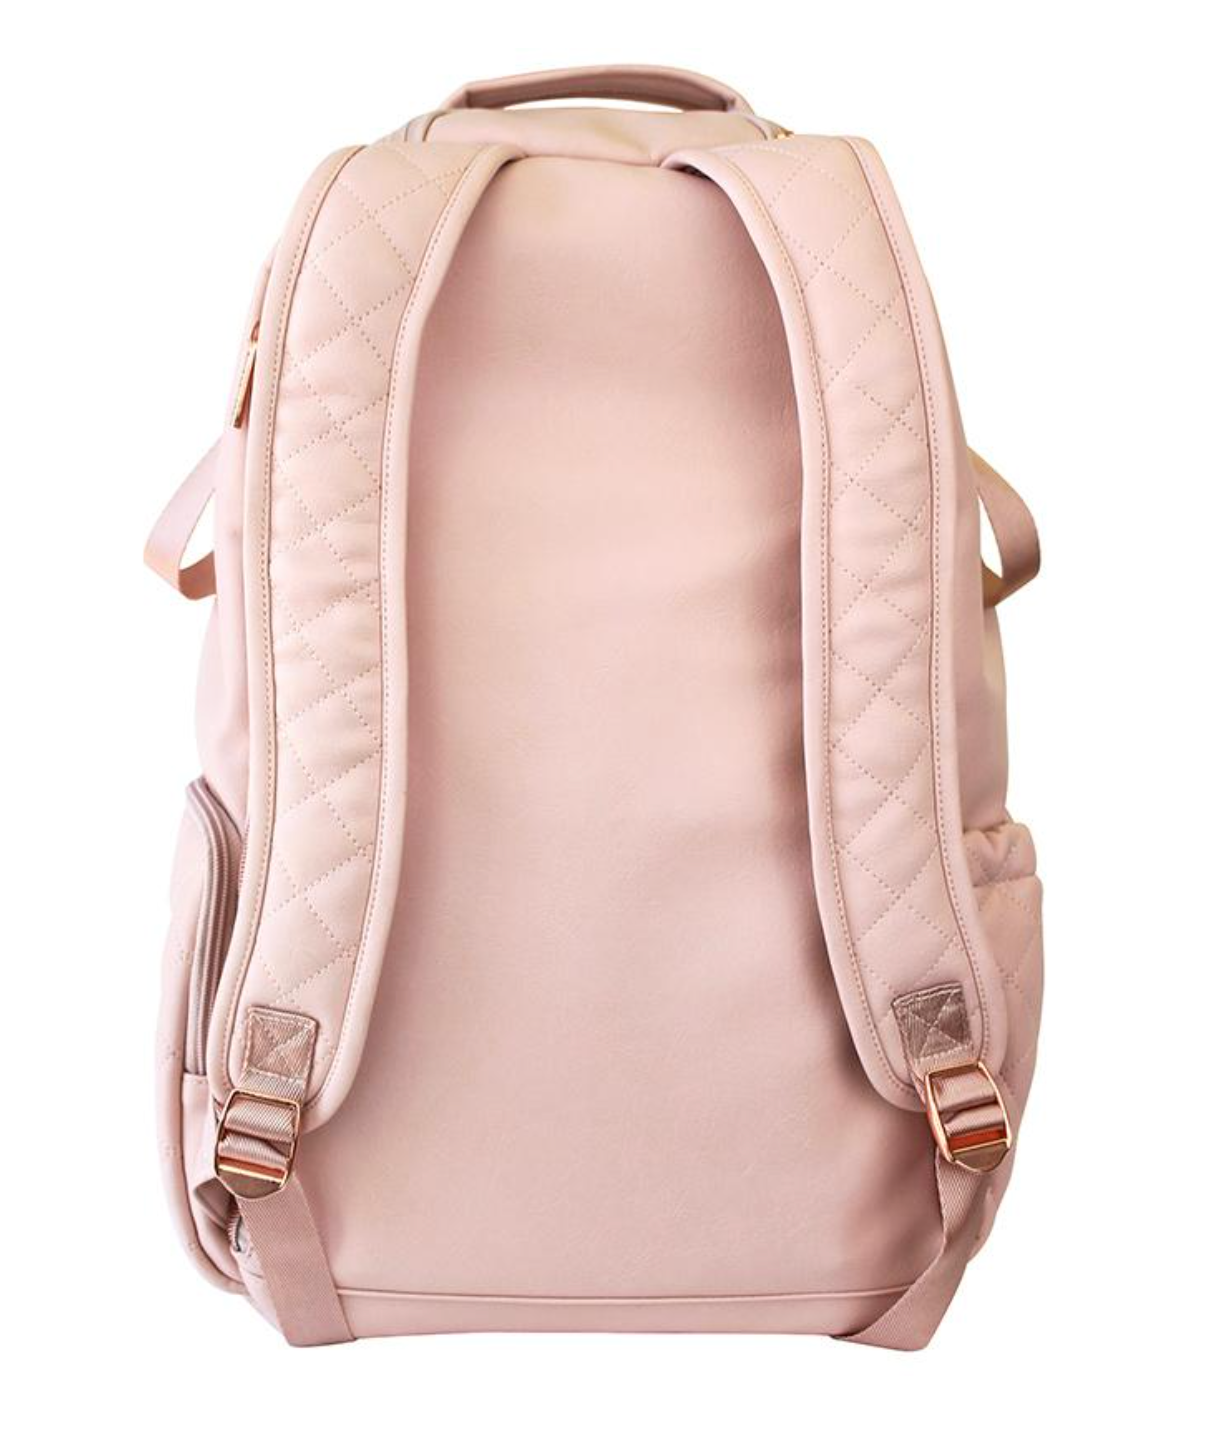 Blush Crush Boss Backpack Diaper Bag